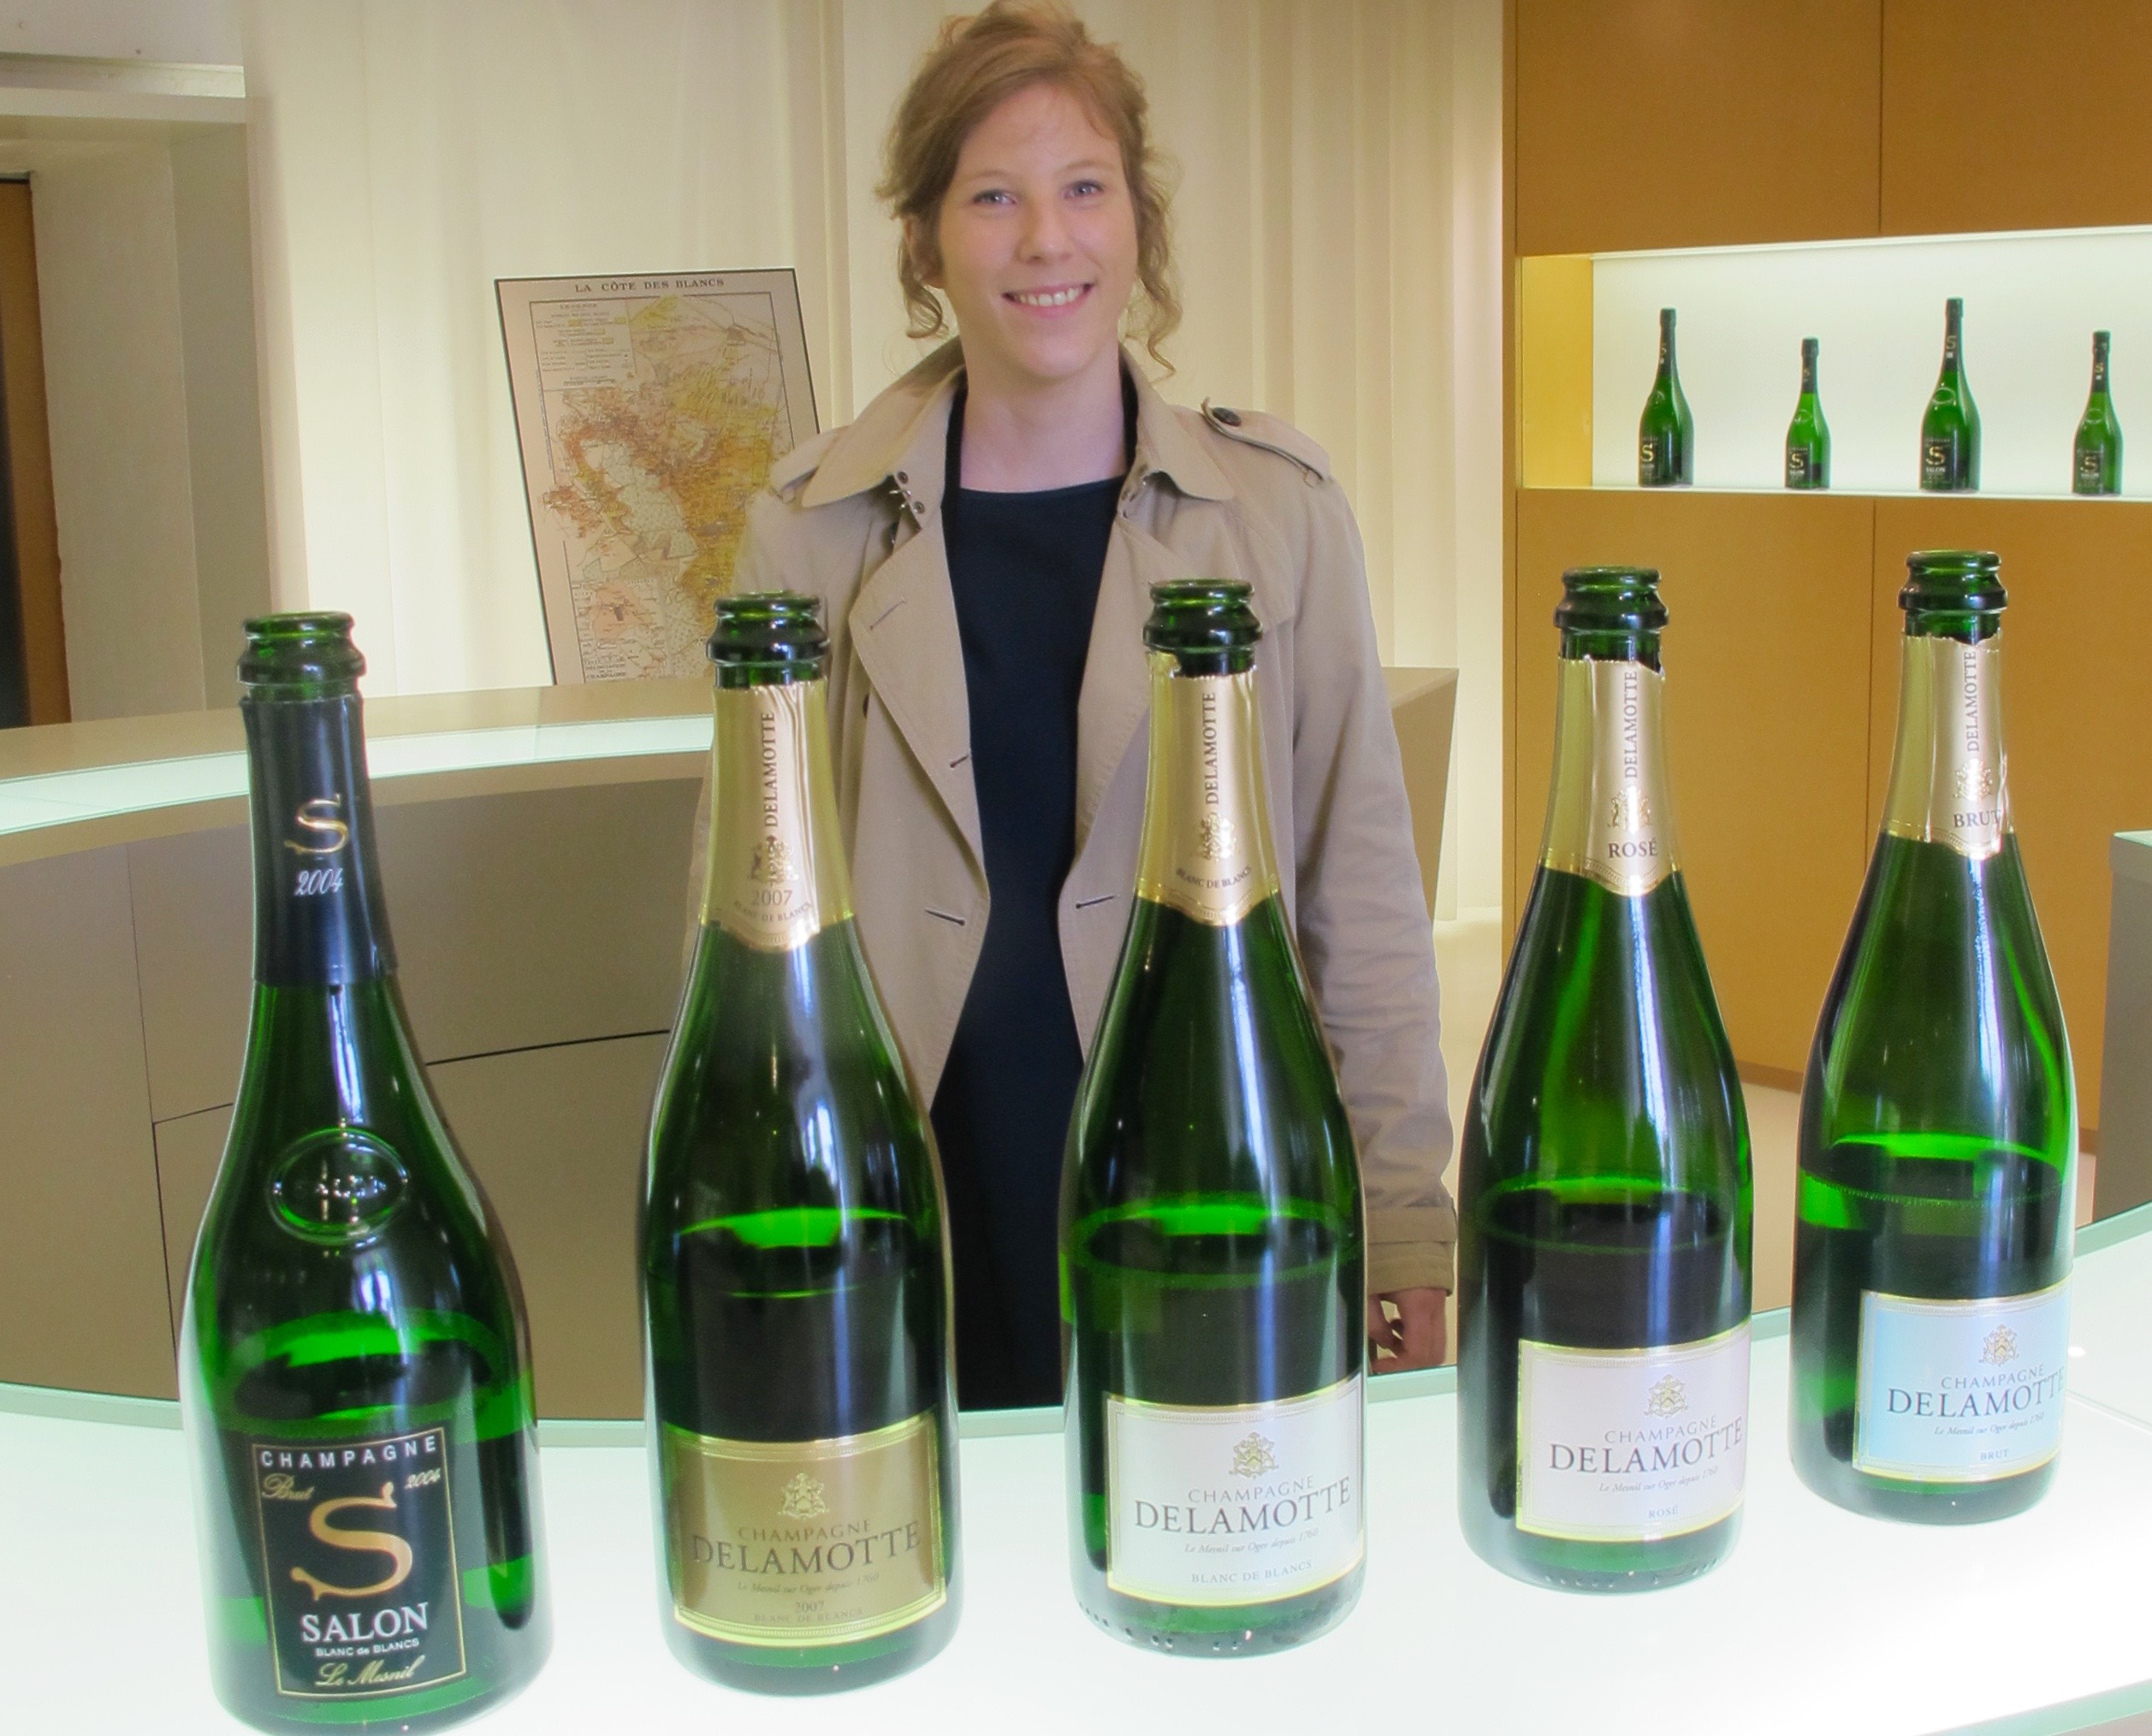 At Domaine Salon Delamotte, Anne-Sophie Hennique samples select Champagnes.